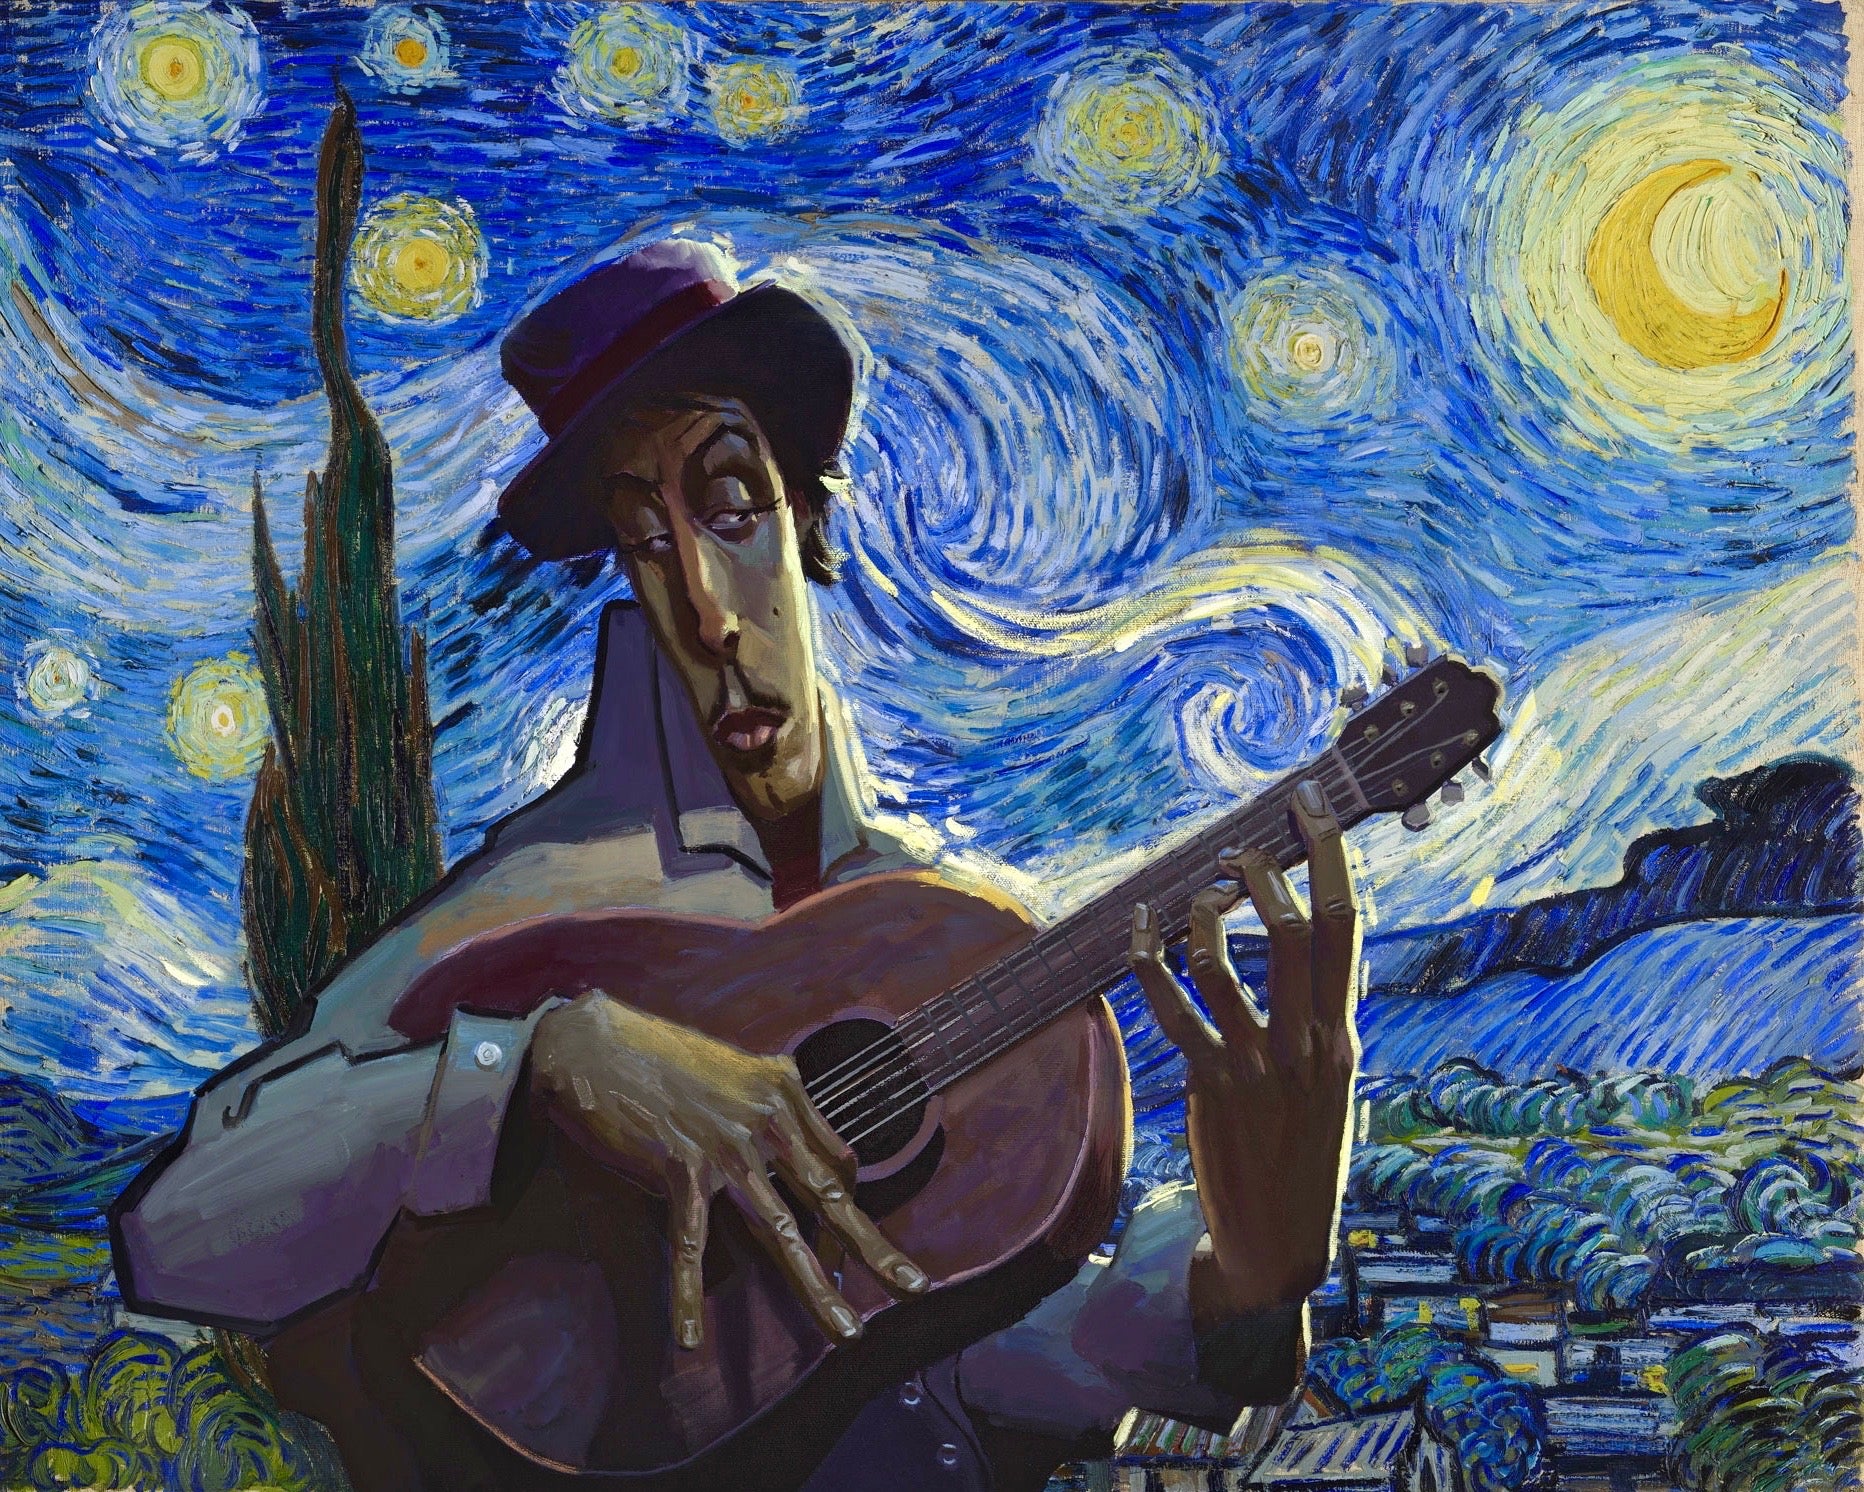 Van Gogh style art by artist Justin BUA